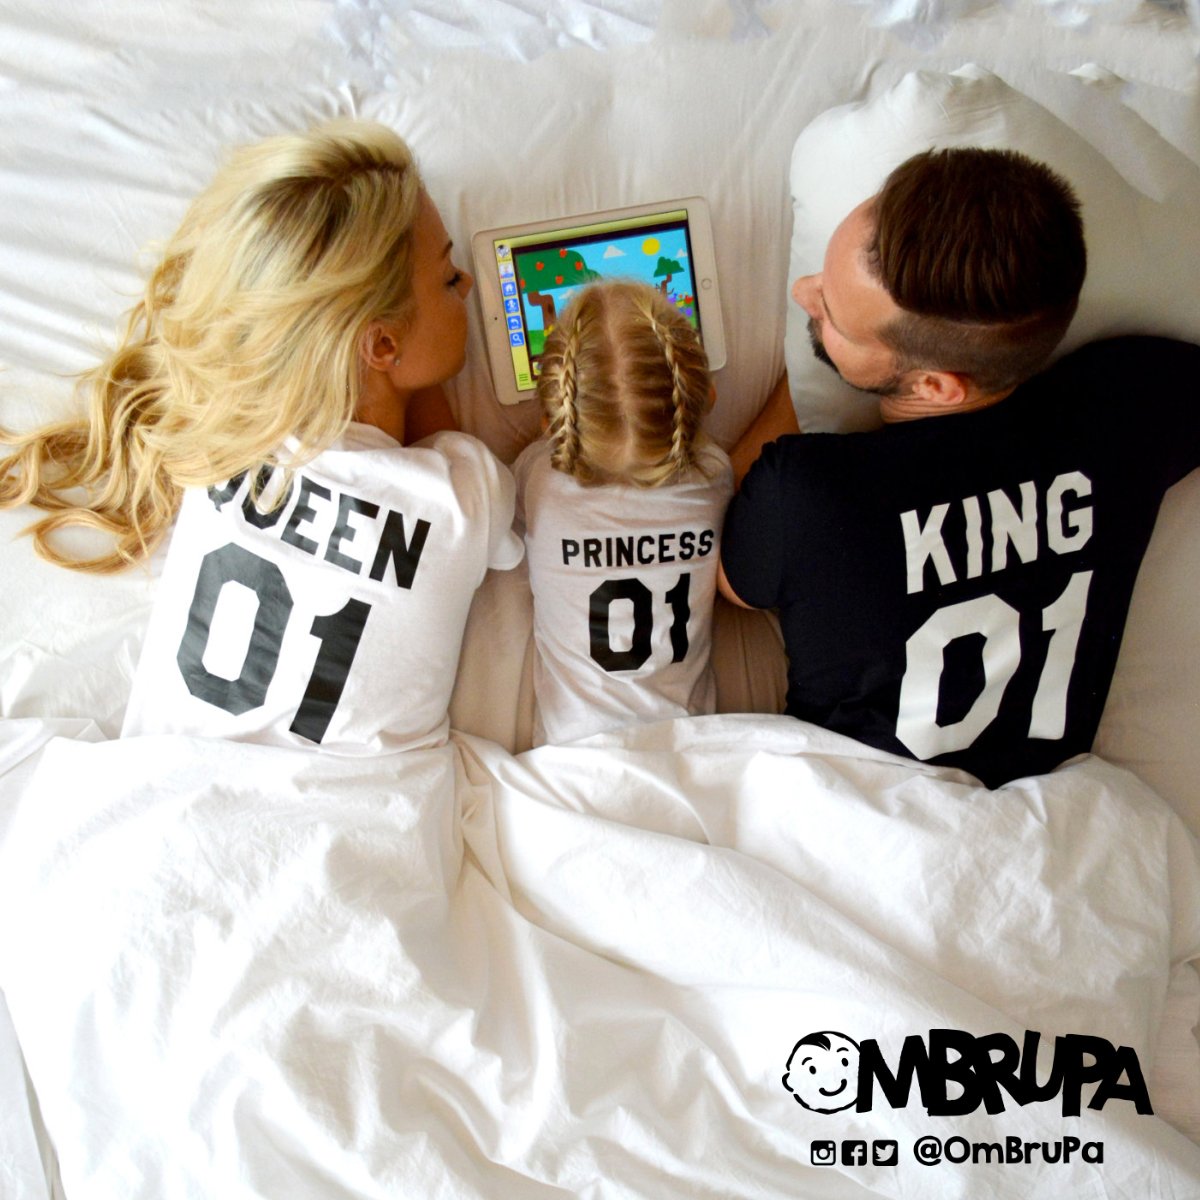 OmBruPa on Twitter: "#Camisetas #Personalizadas #Familia #King #Queen # Princess #Amor https://t.co/1P3QZow4KS" /